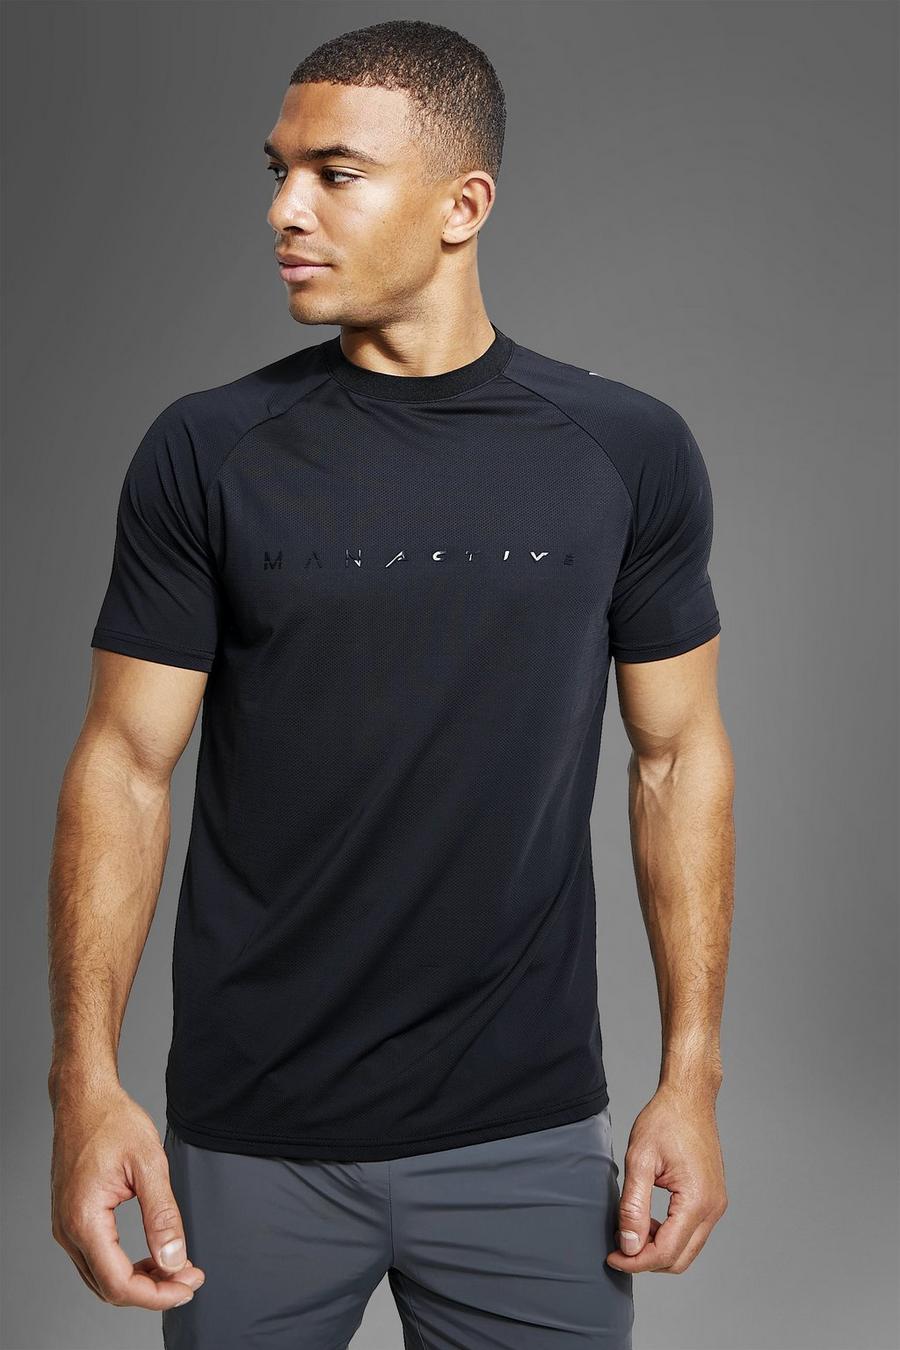 Black svart Man Active Gym Performance Tech T Shirt